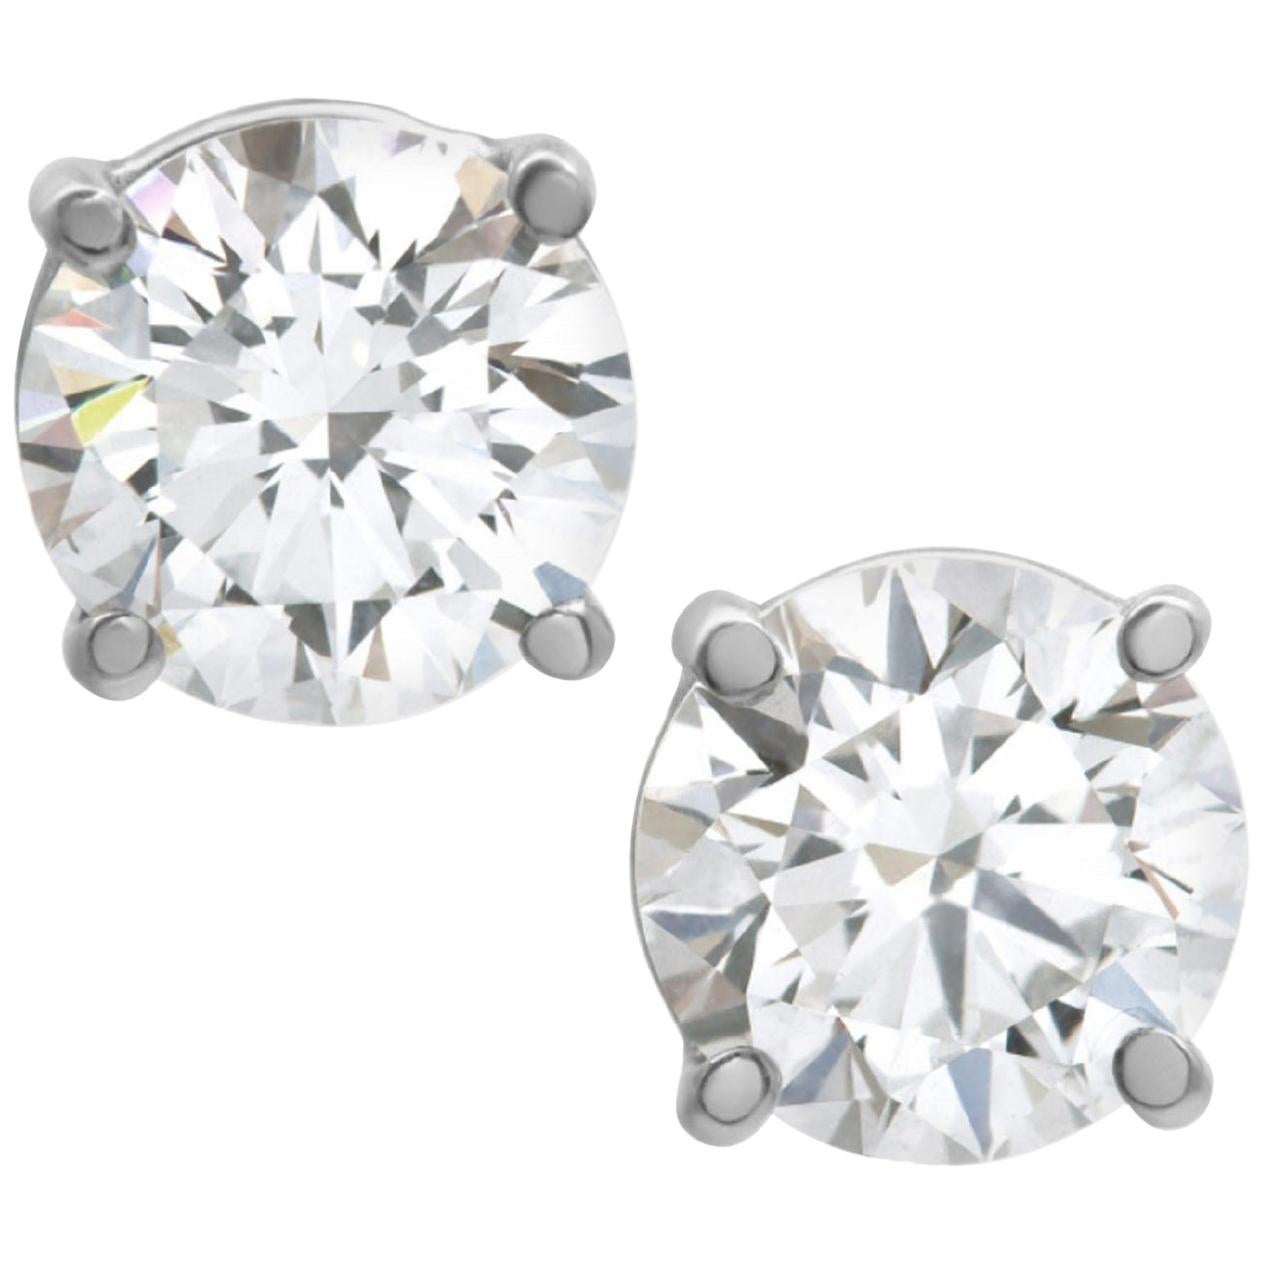 Internally Flawless D Color GIA Certified 4.01 Carat Diamond Studs